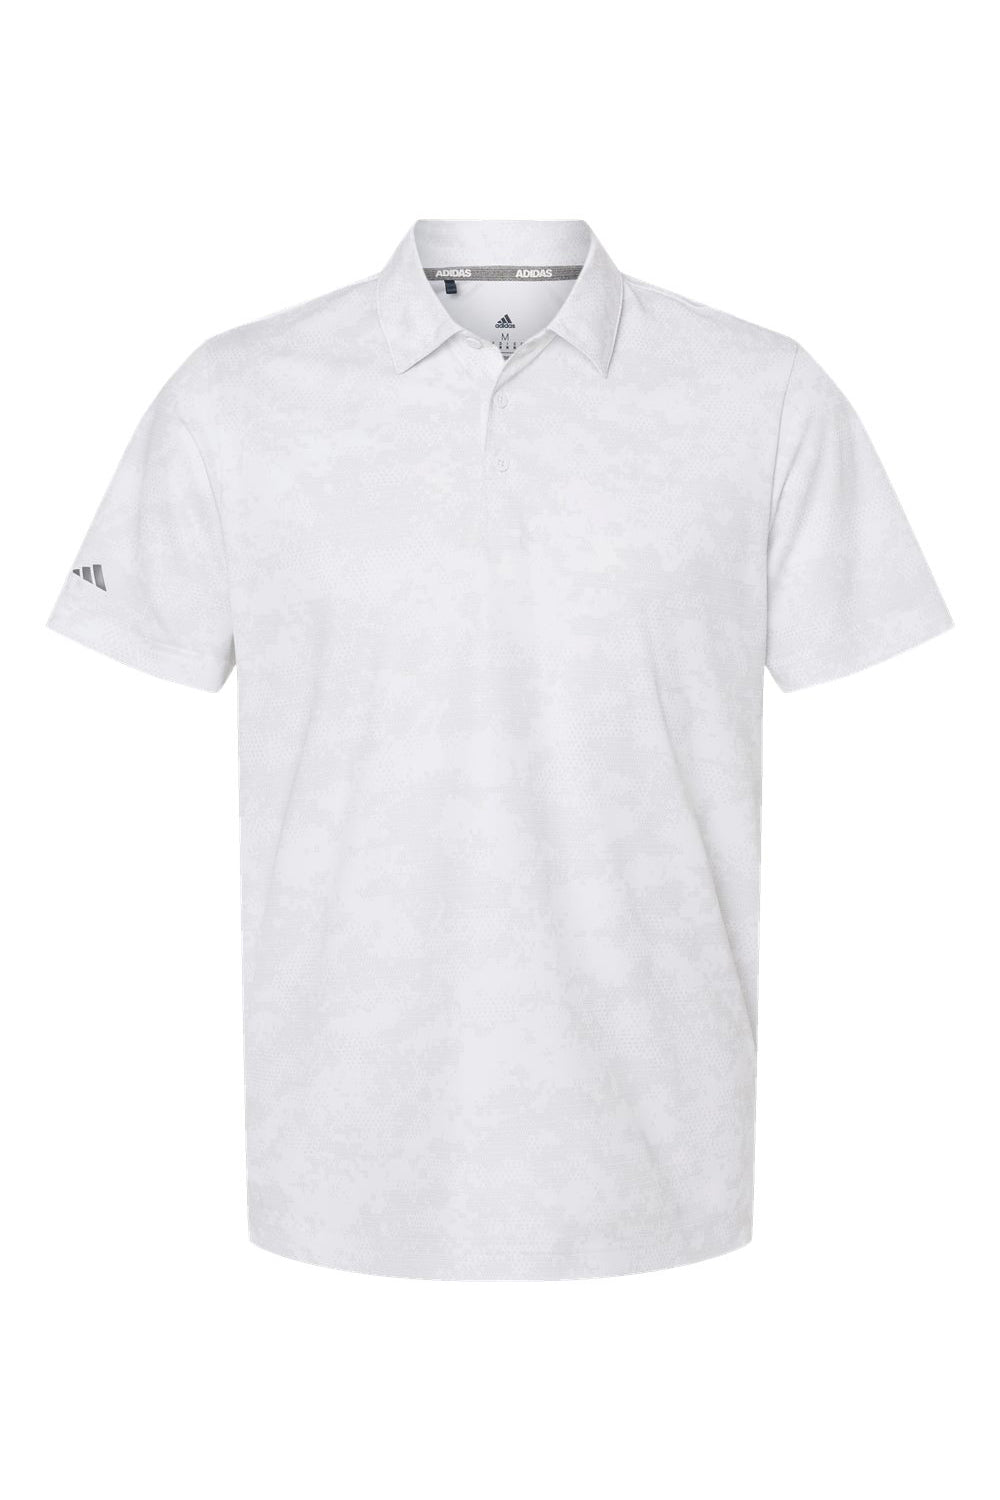 Adidas A550 Mens Camo Short Sleeve Polo Shirt White Flat Front